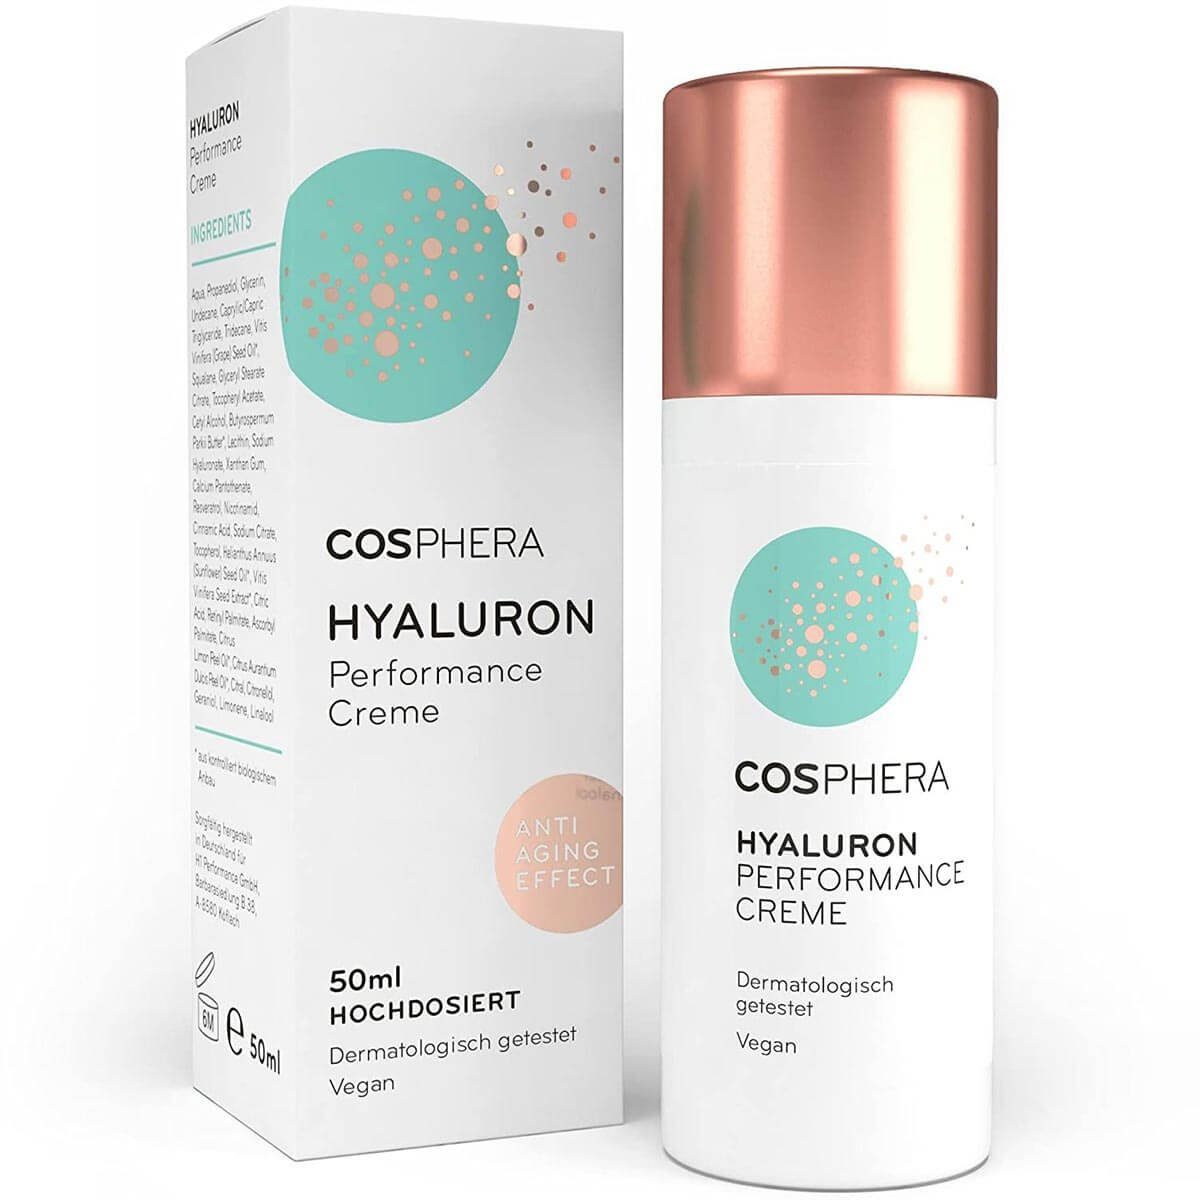 Cosphera Anti-Aging-Creme Cosphera - Hyaluron Performance Creme 50 ml - vegane Tages- und Nachtc, Feuchtigkeitsspendende Anti-Aging-Creme